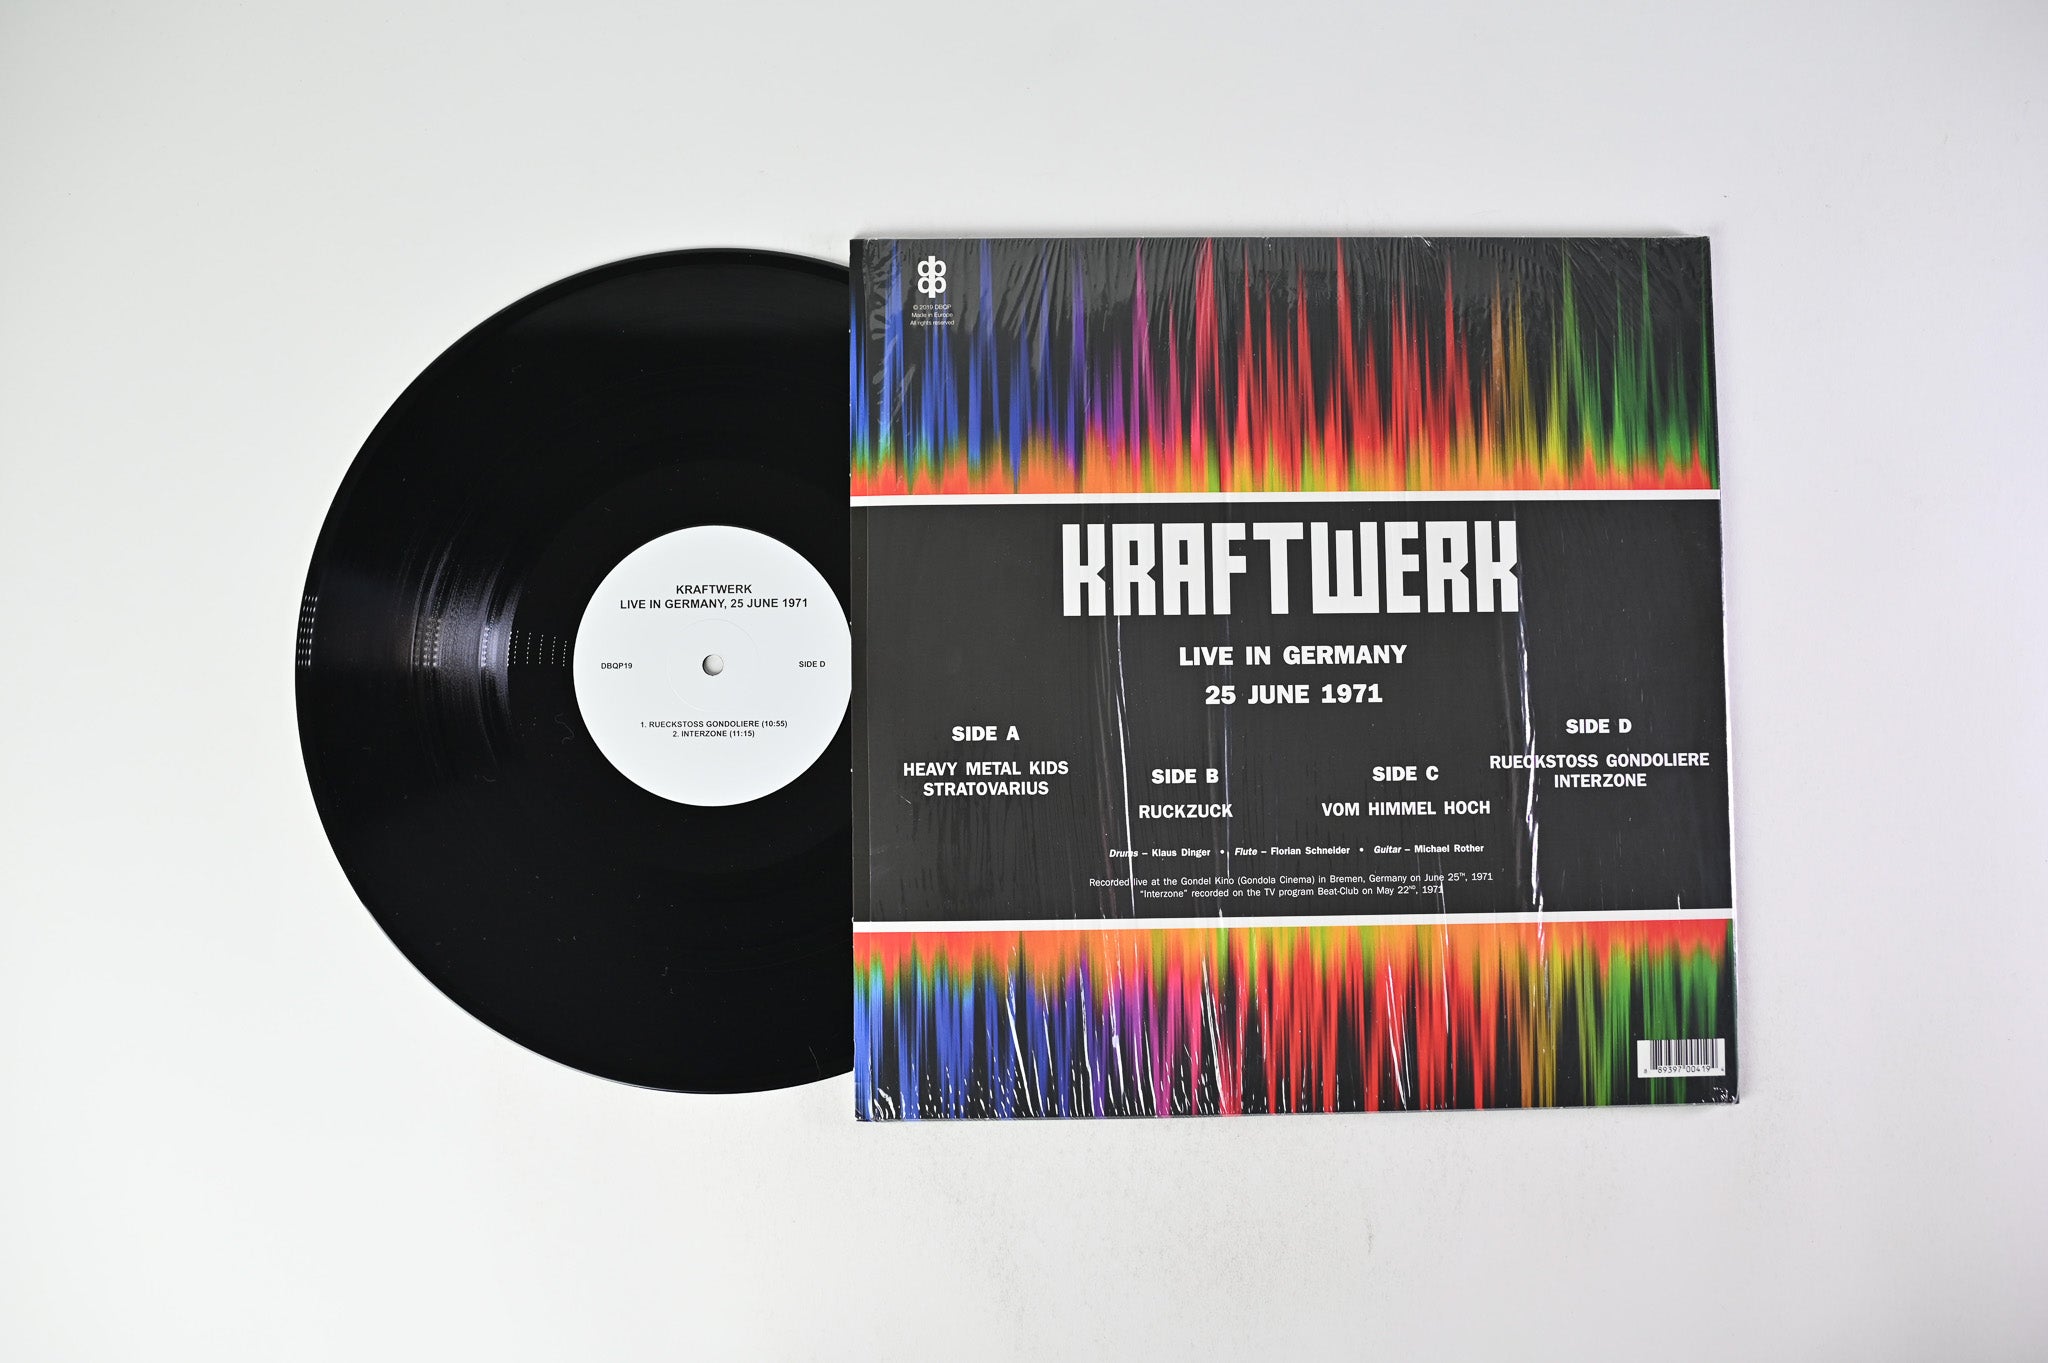 Kraftwerk - Live In Germany 25 June 1971 on DBQP Unofficial Release